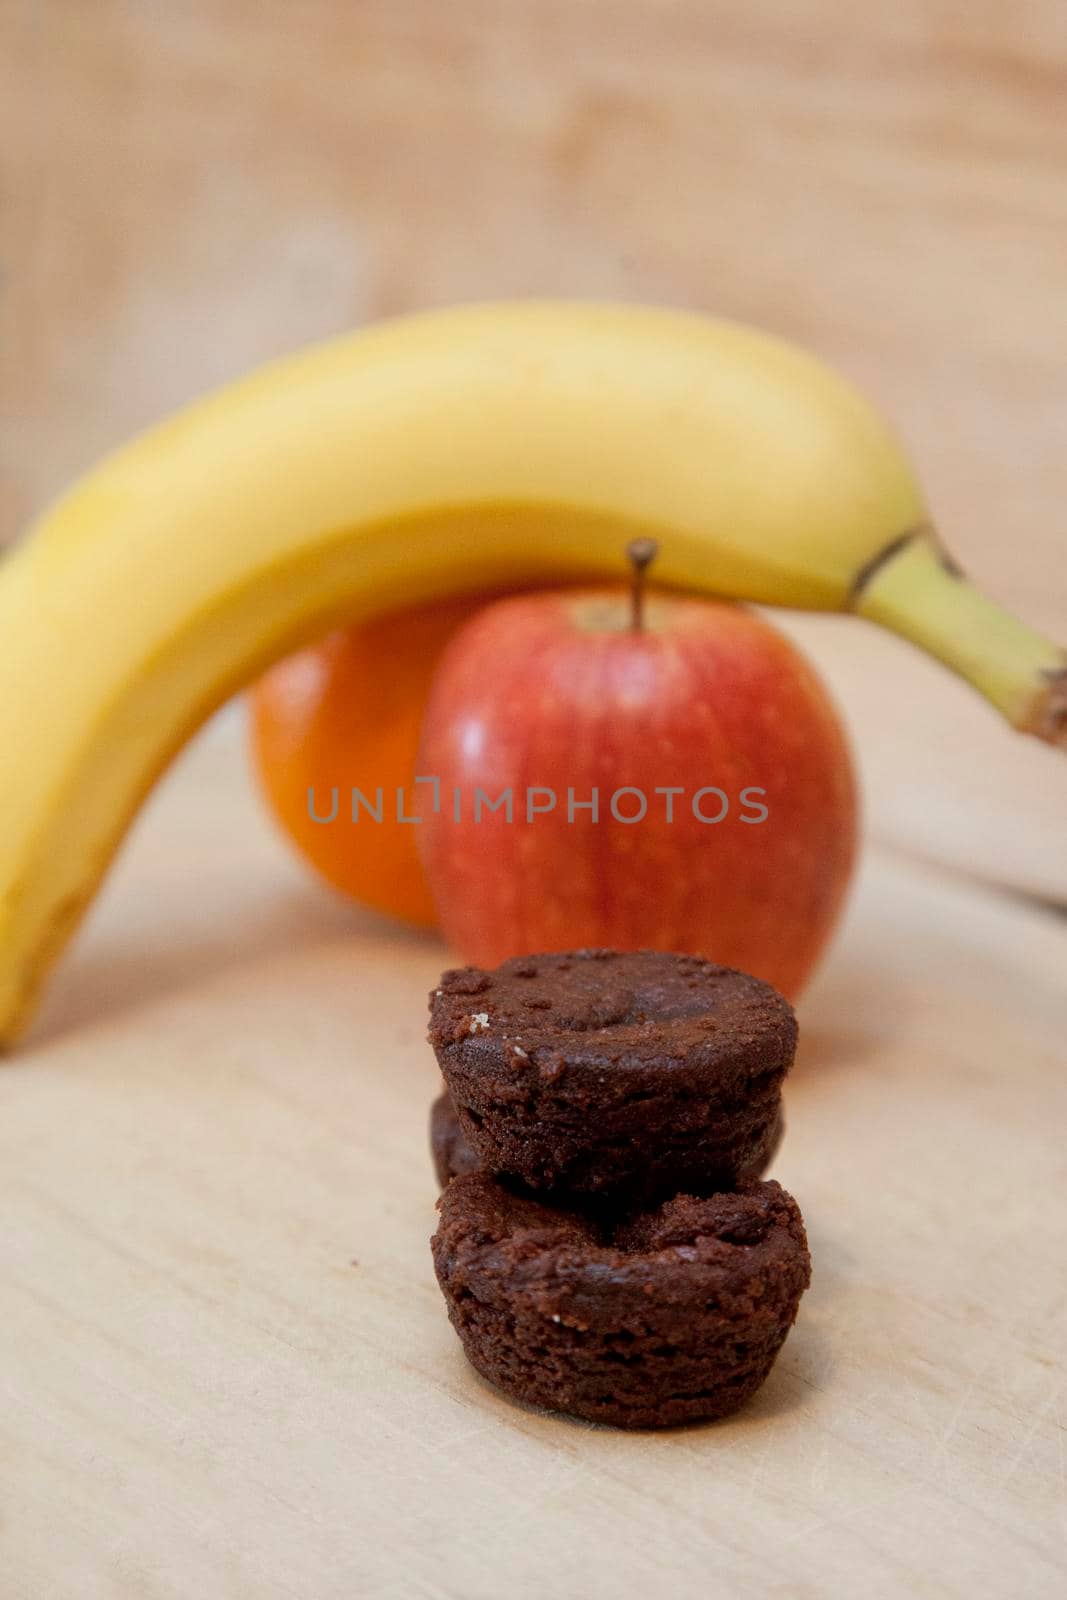 Sugary brownie dessert or fruit  by rustycanuck